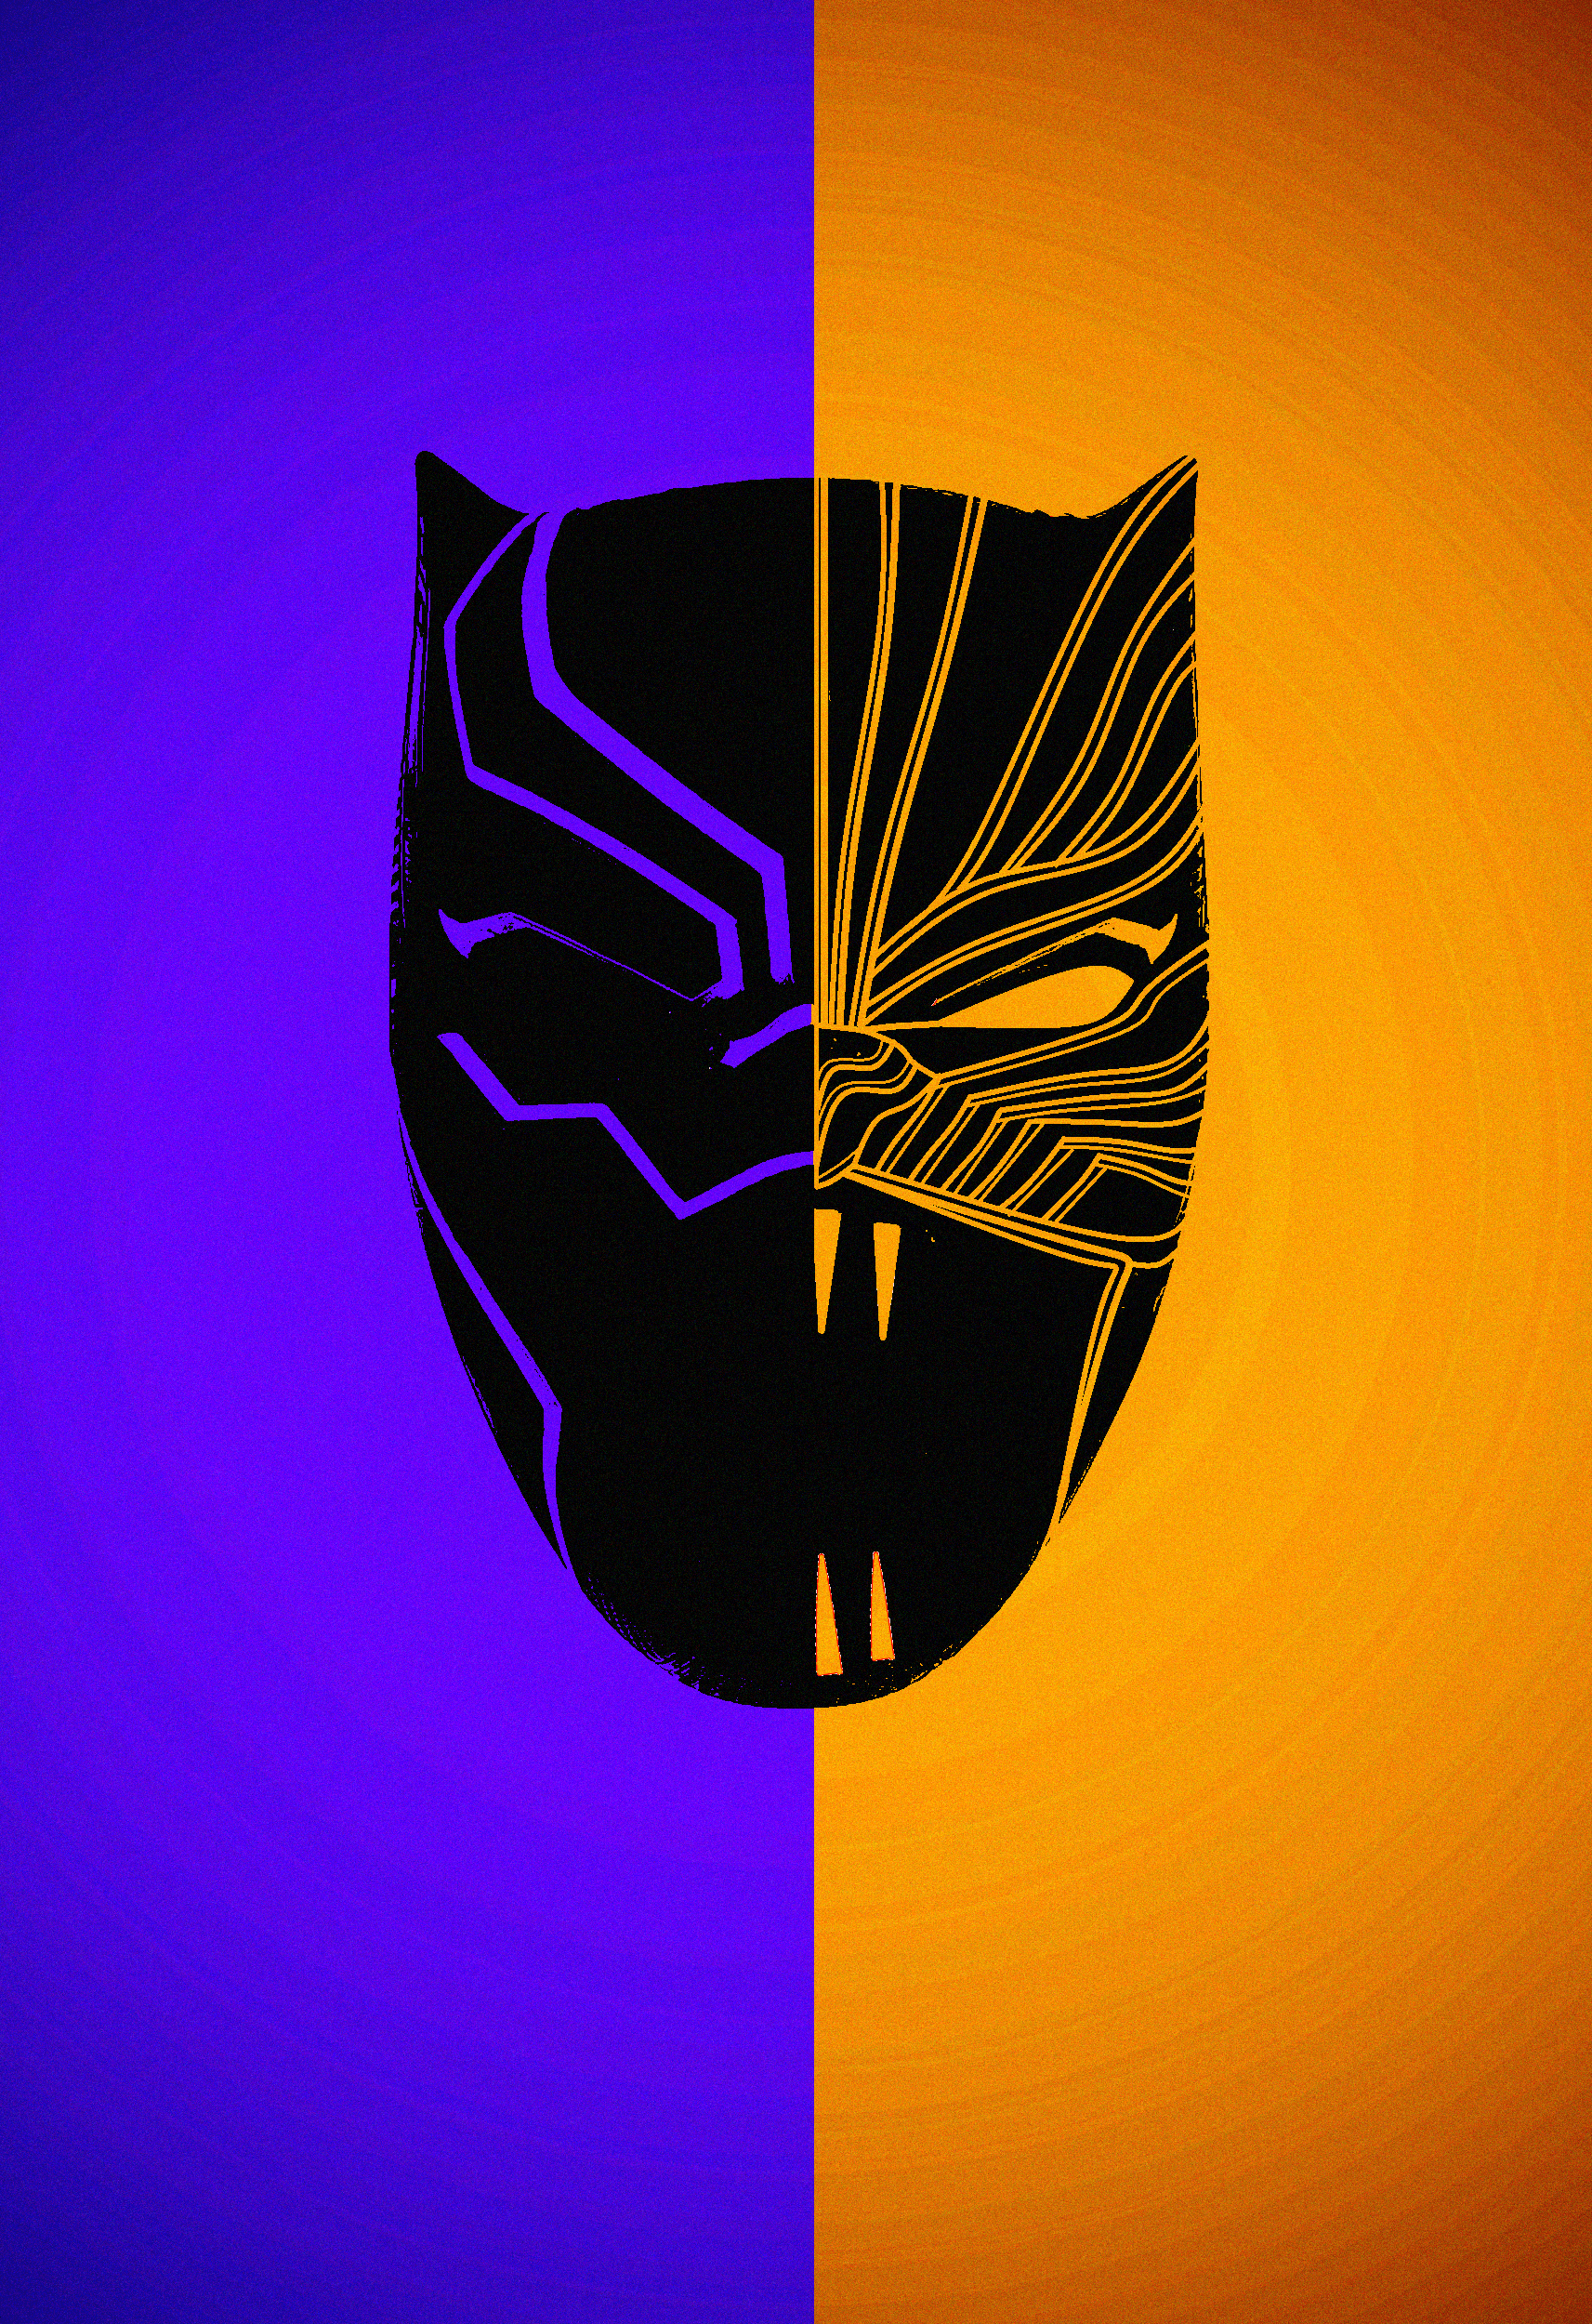 Black Panther Poster I made! Feat. The Gold Jaguar AKA Killmonger